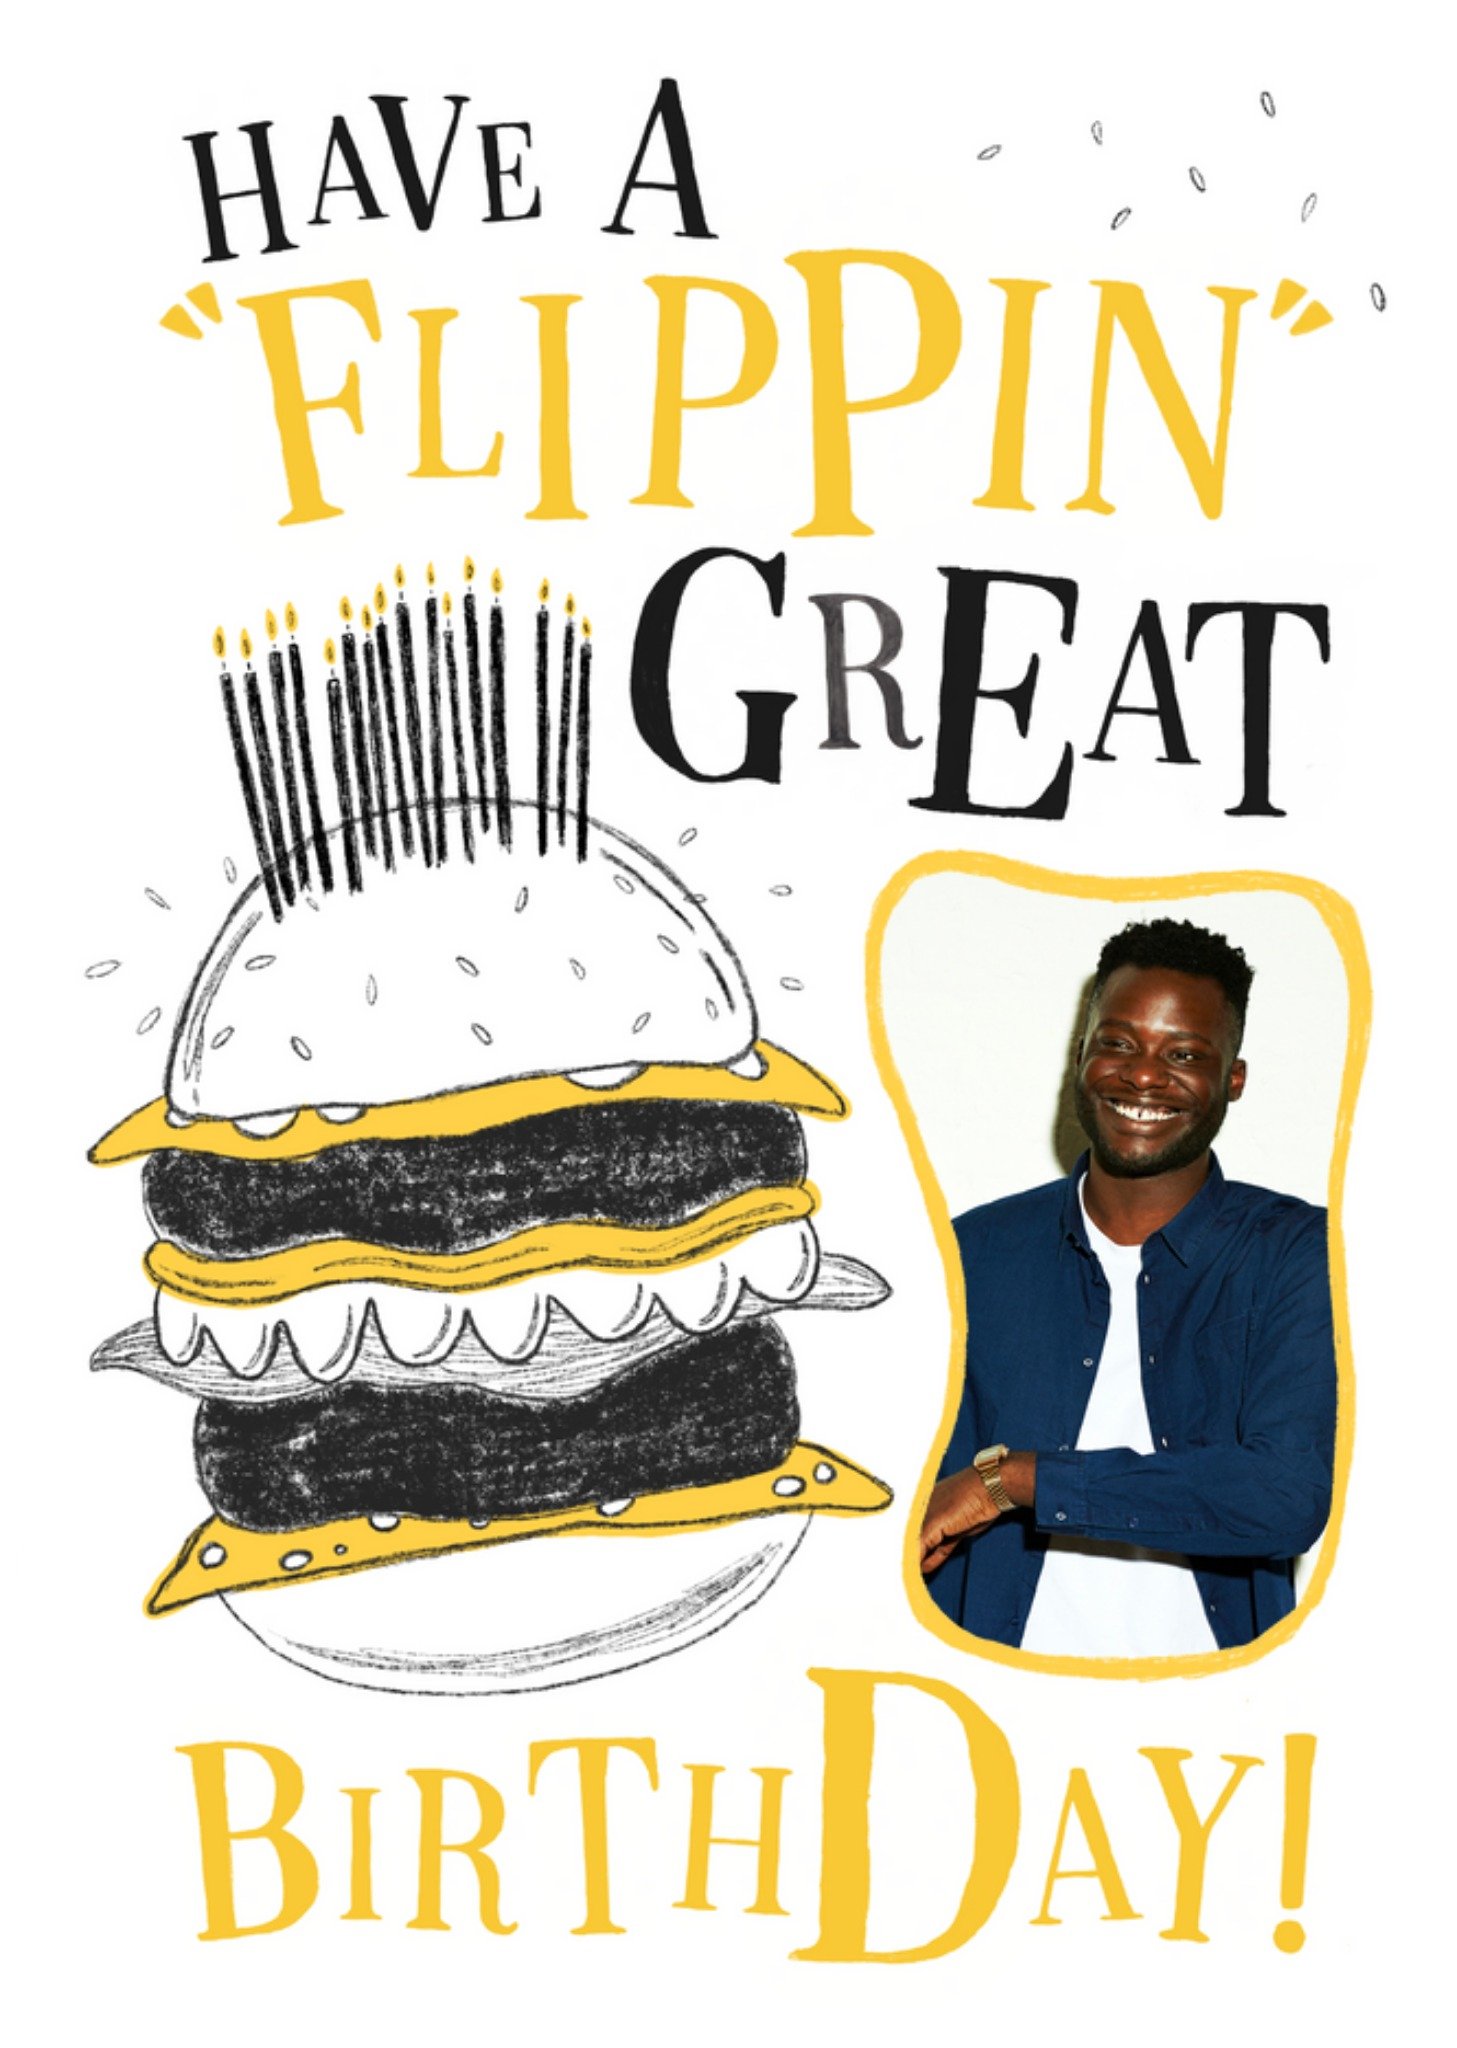 Moonpig Humorous Flippin Great Illustrated Cheese Burger Birthday Cake Photo Upload Card Ecard